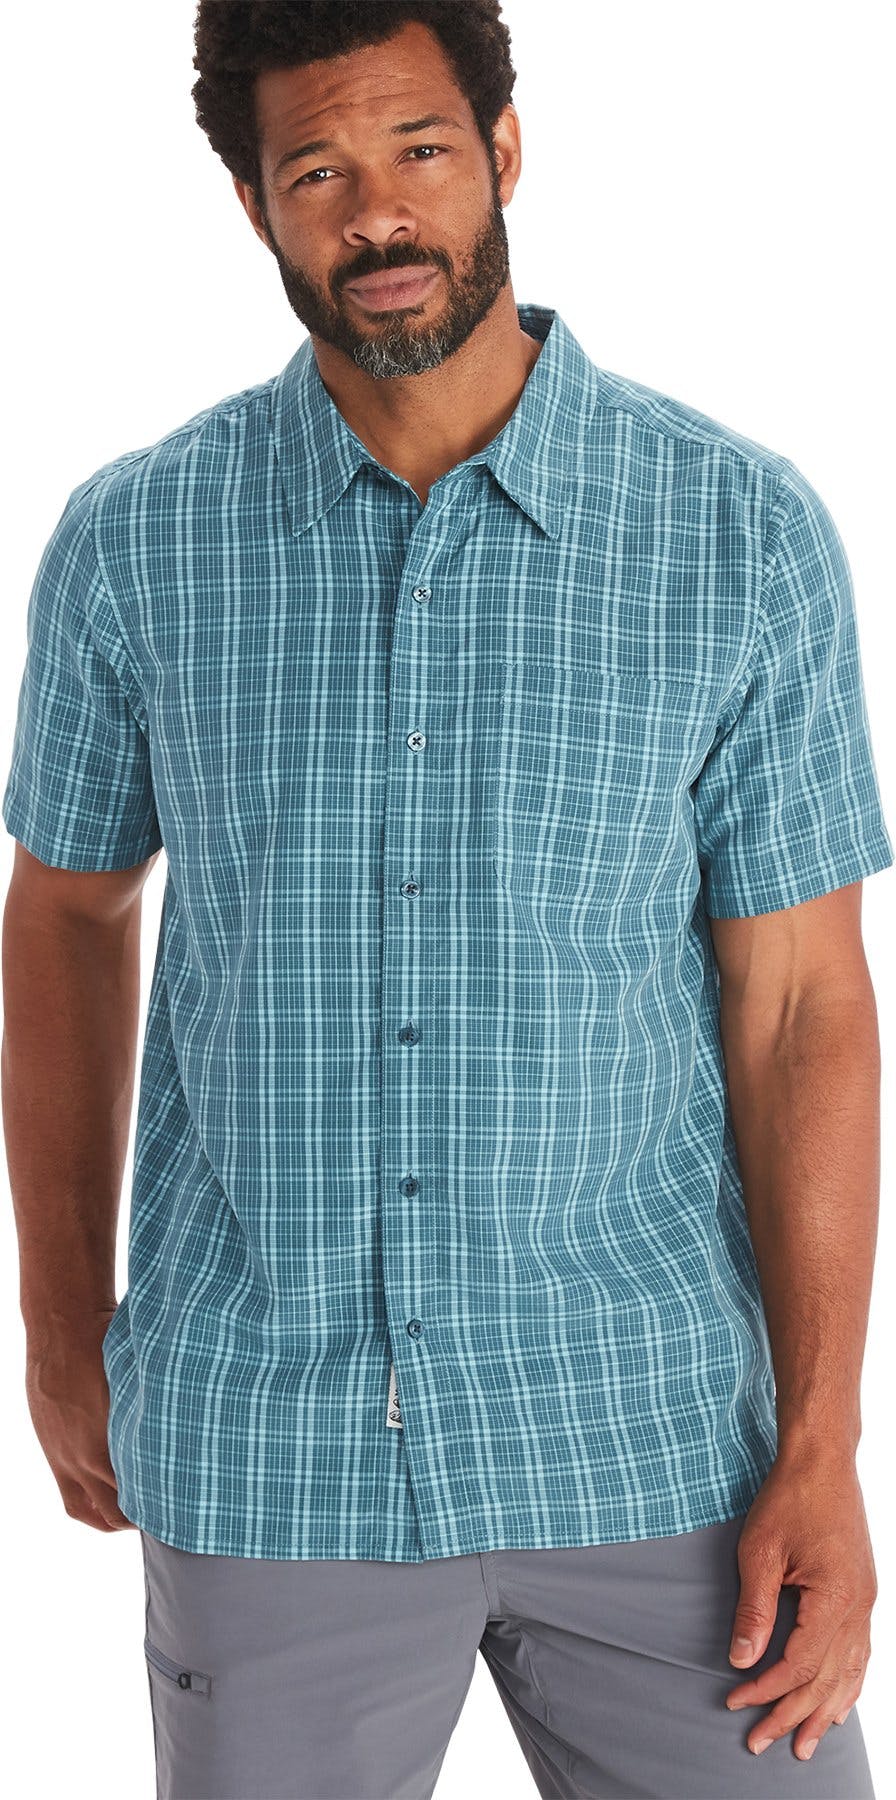 Product image for Eldridge Novelty Classic Short Sleeve Shirt - Men's